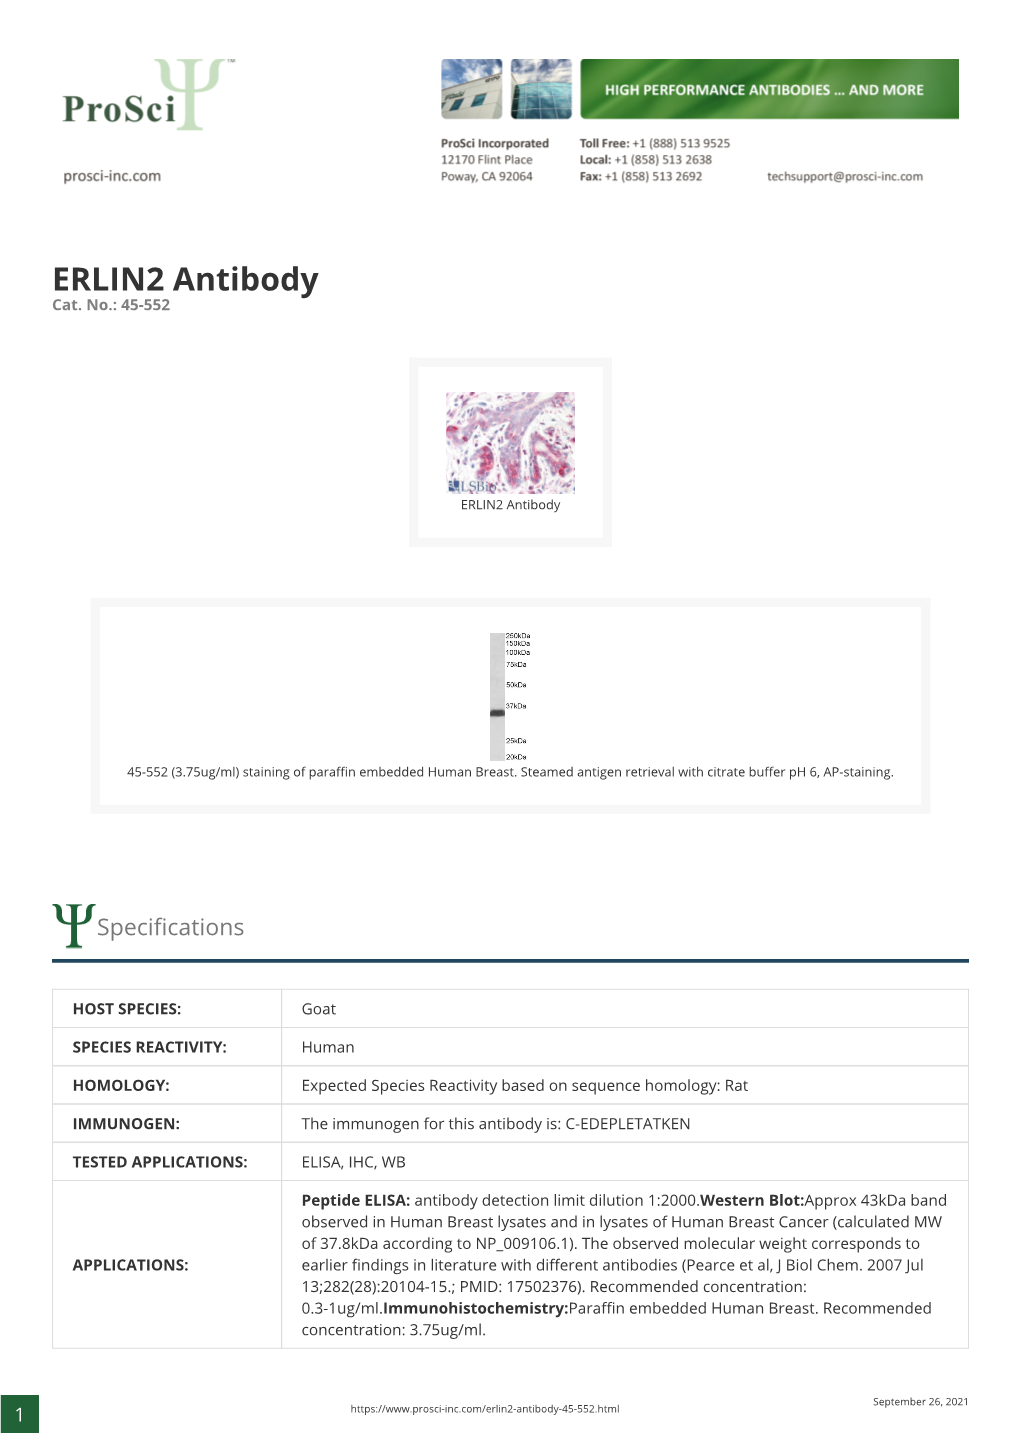 ERLIN2 Antibody Cat